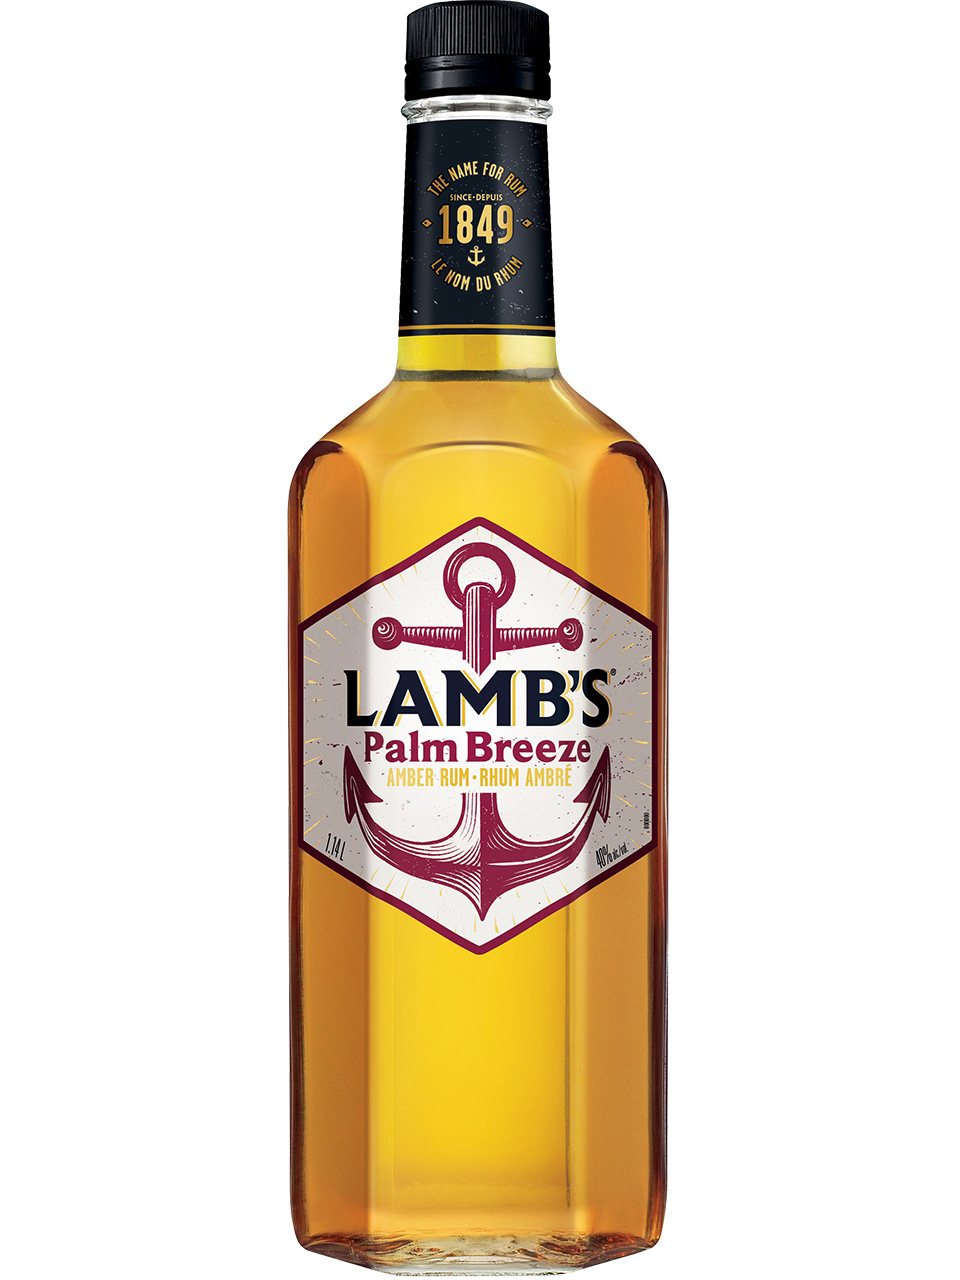 Lamb's Palm Breeze Rum